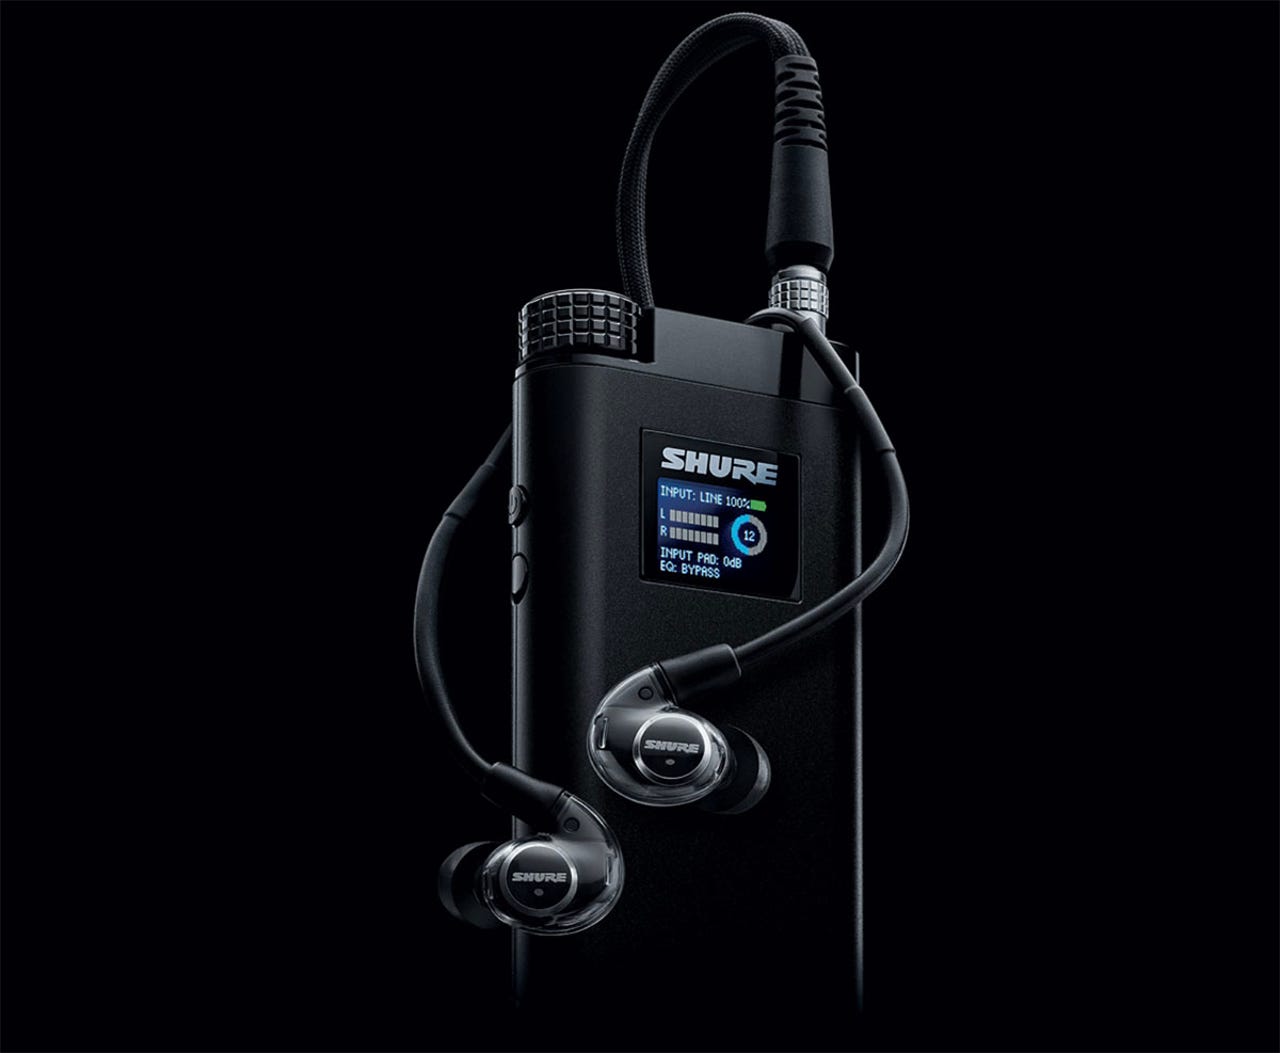 zdnet-luxury-gifts-shure-headphones.jpg